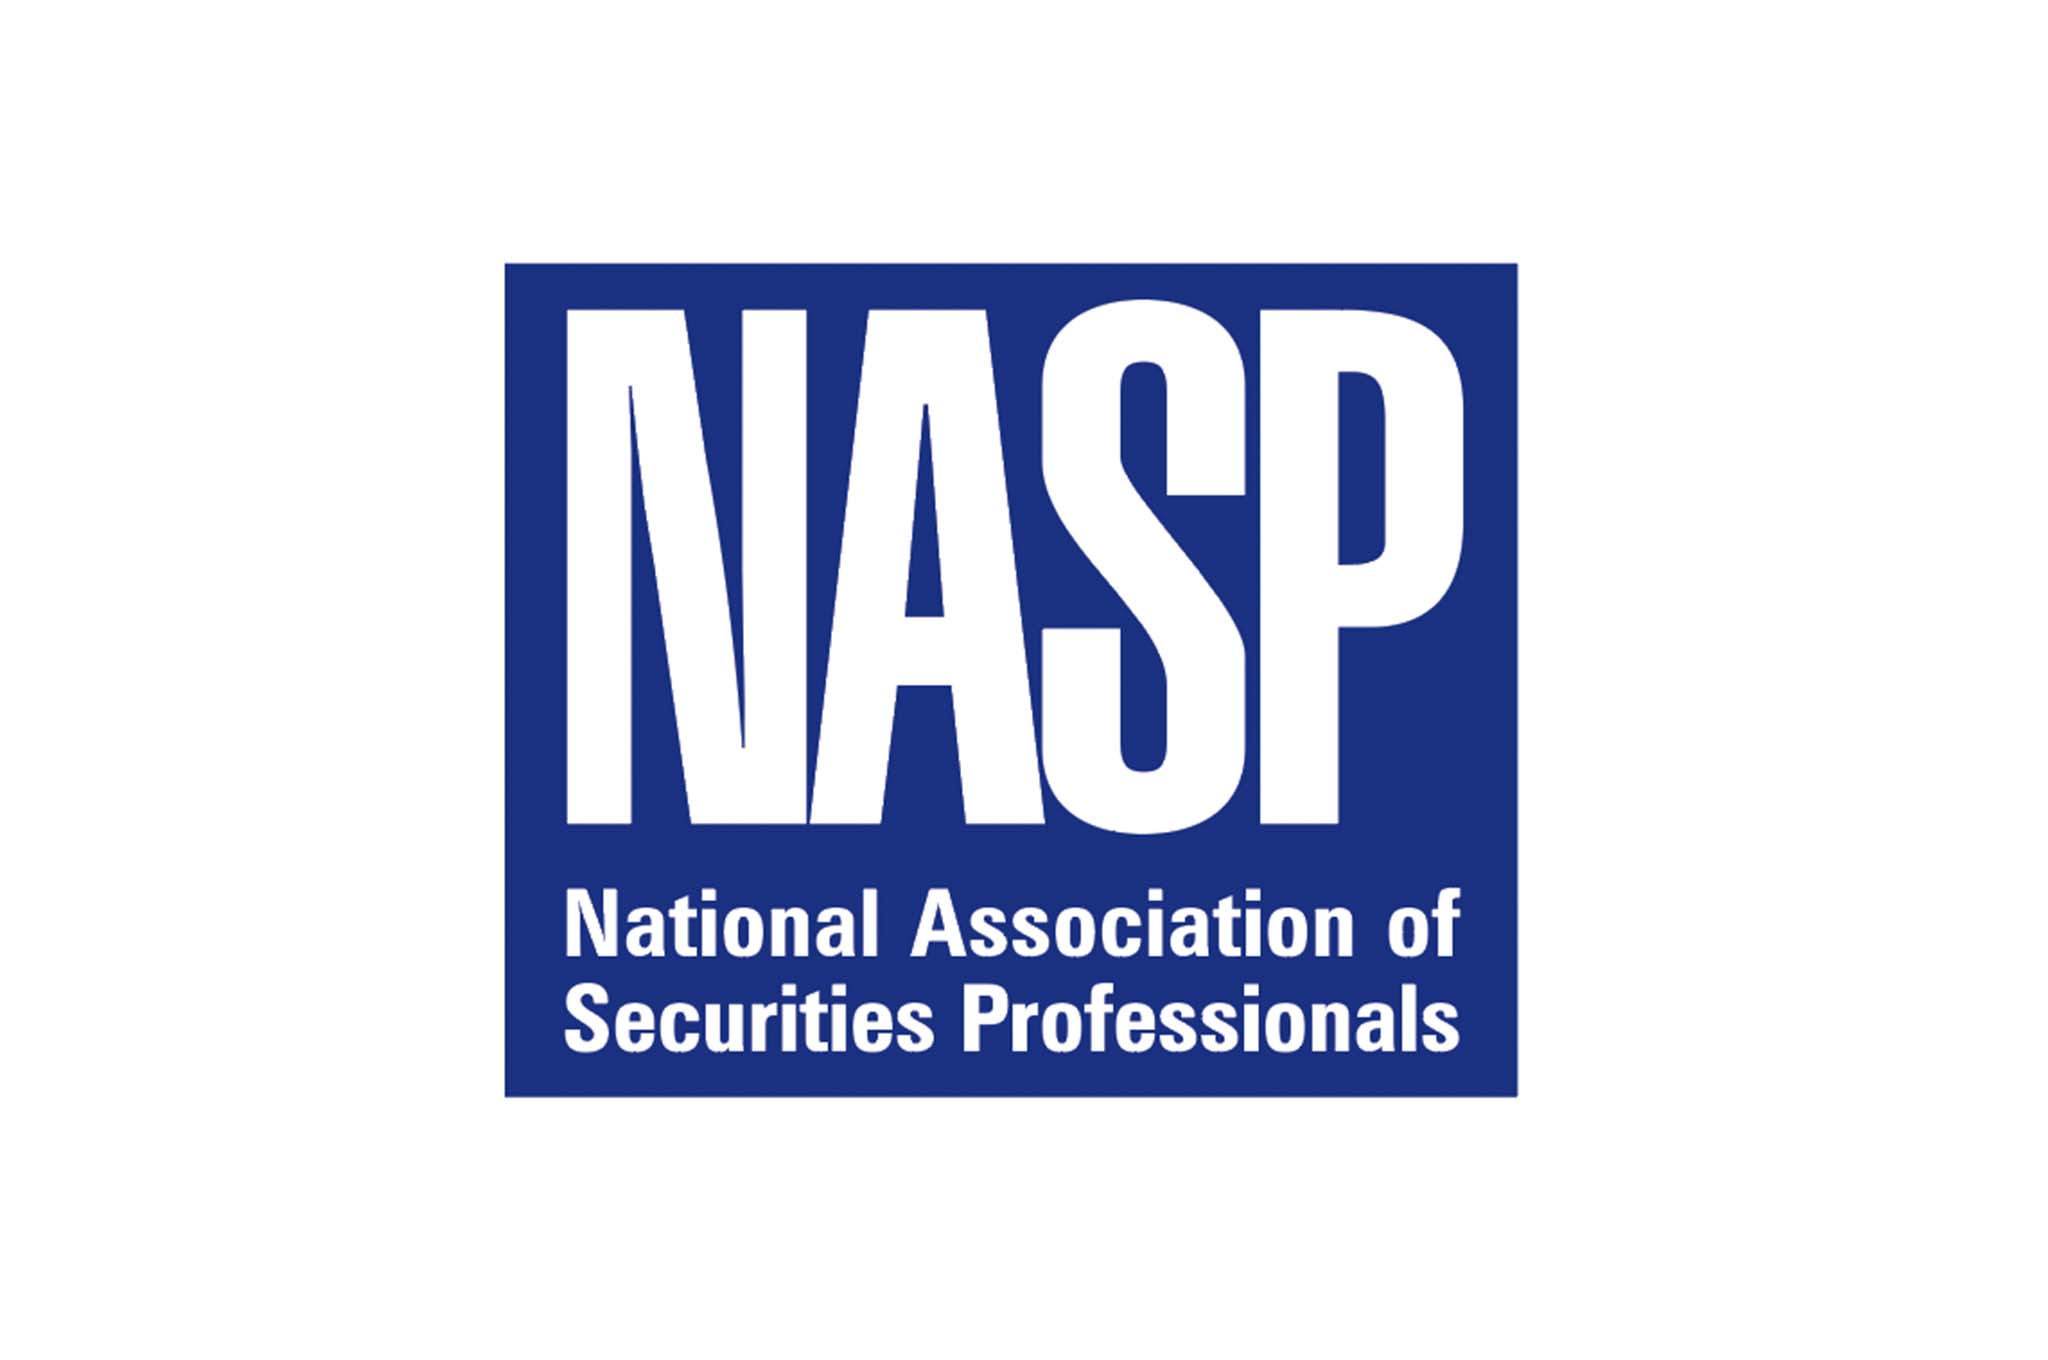 National Association of Securities Professionals